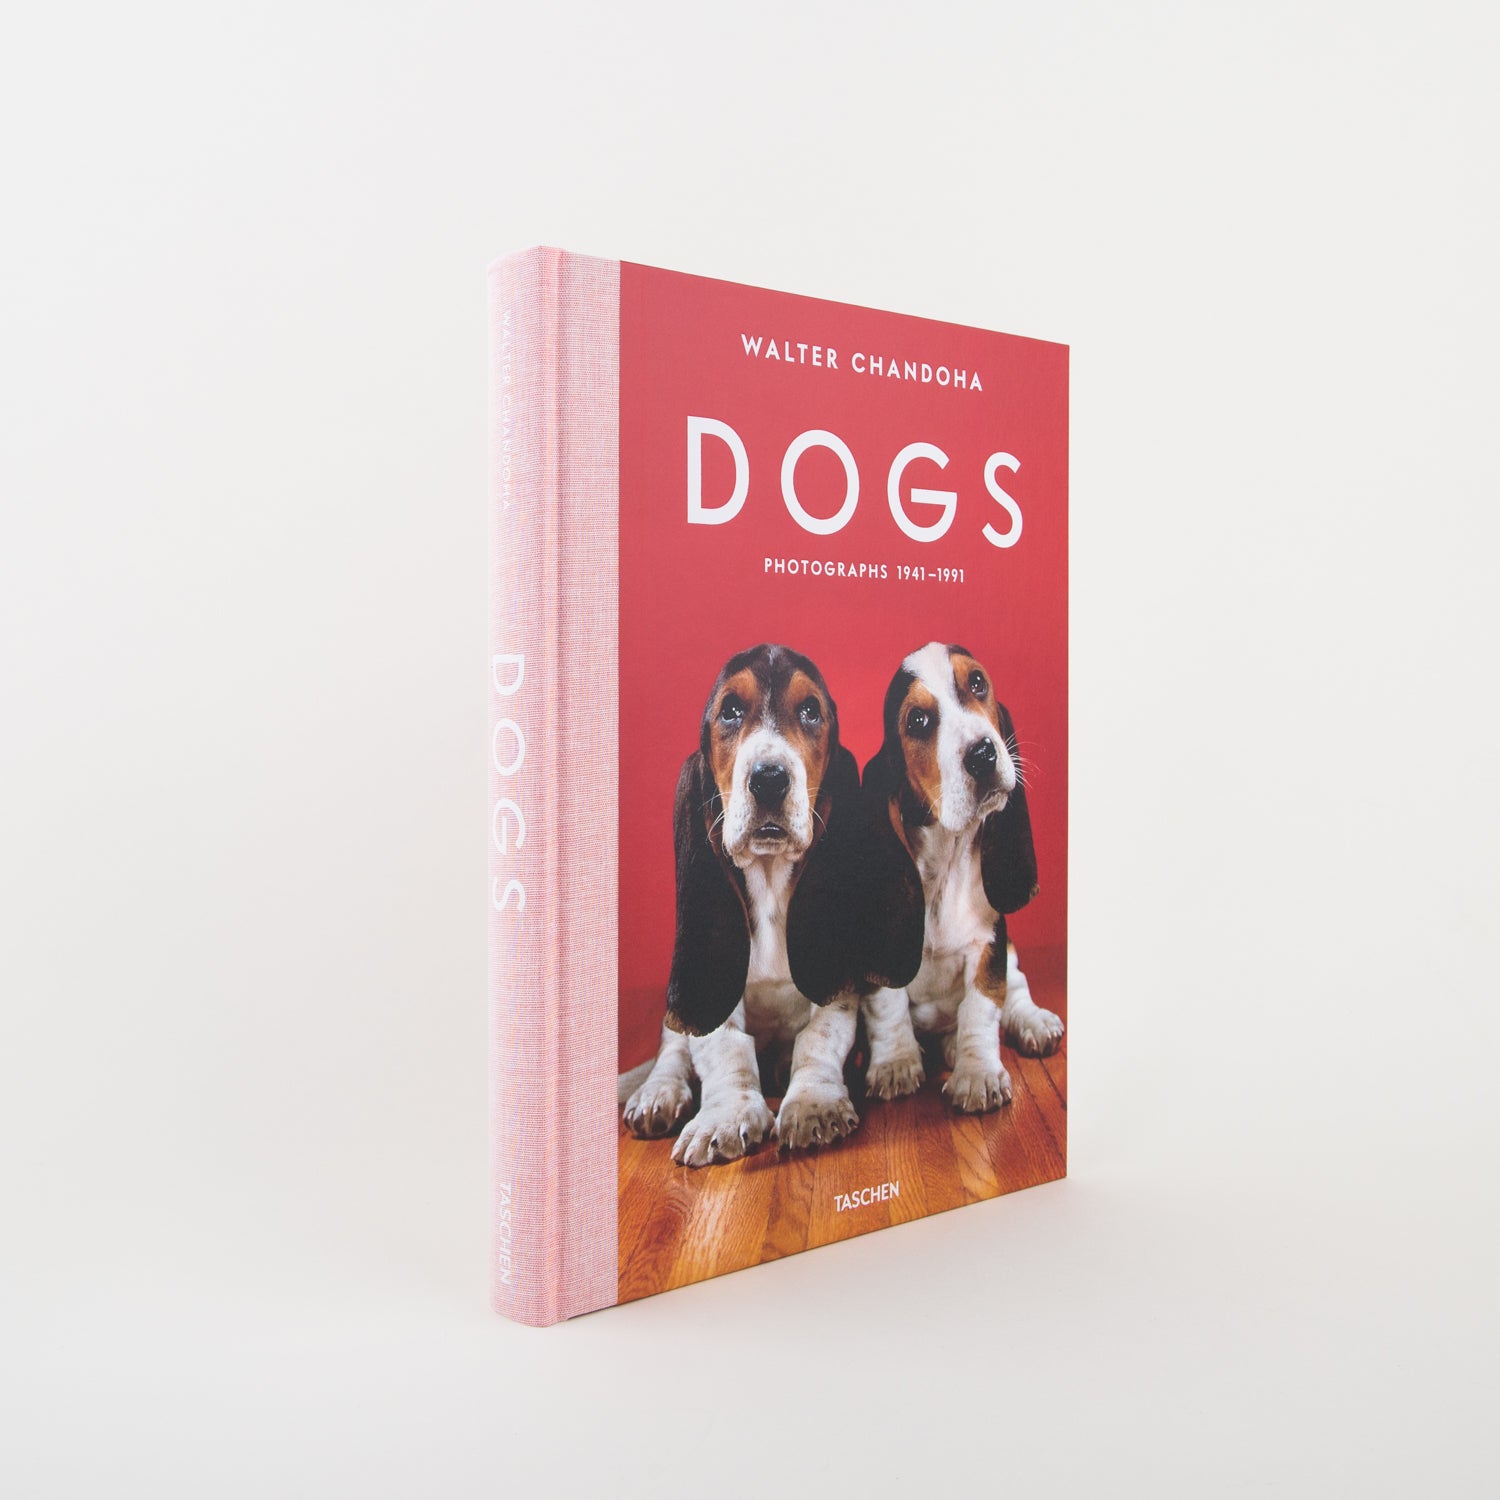 walter chandoha dogs photographs book at Secret Location